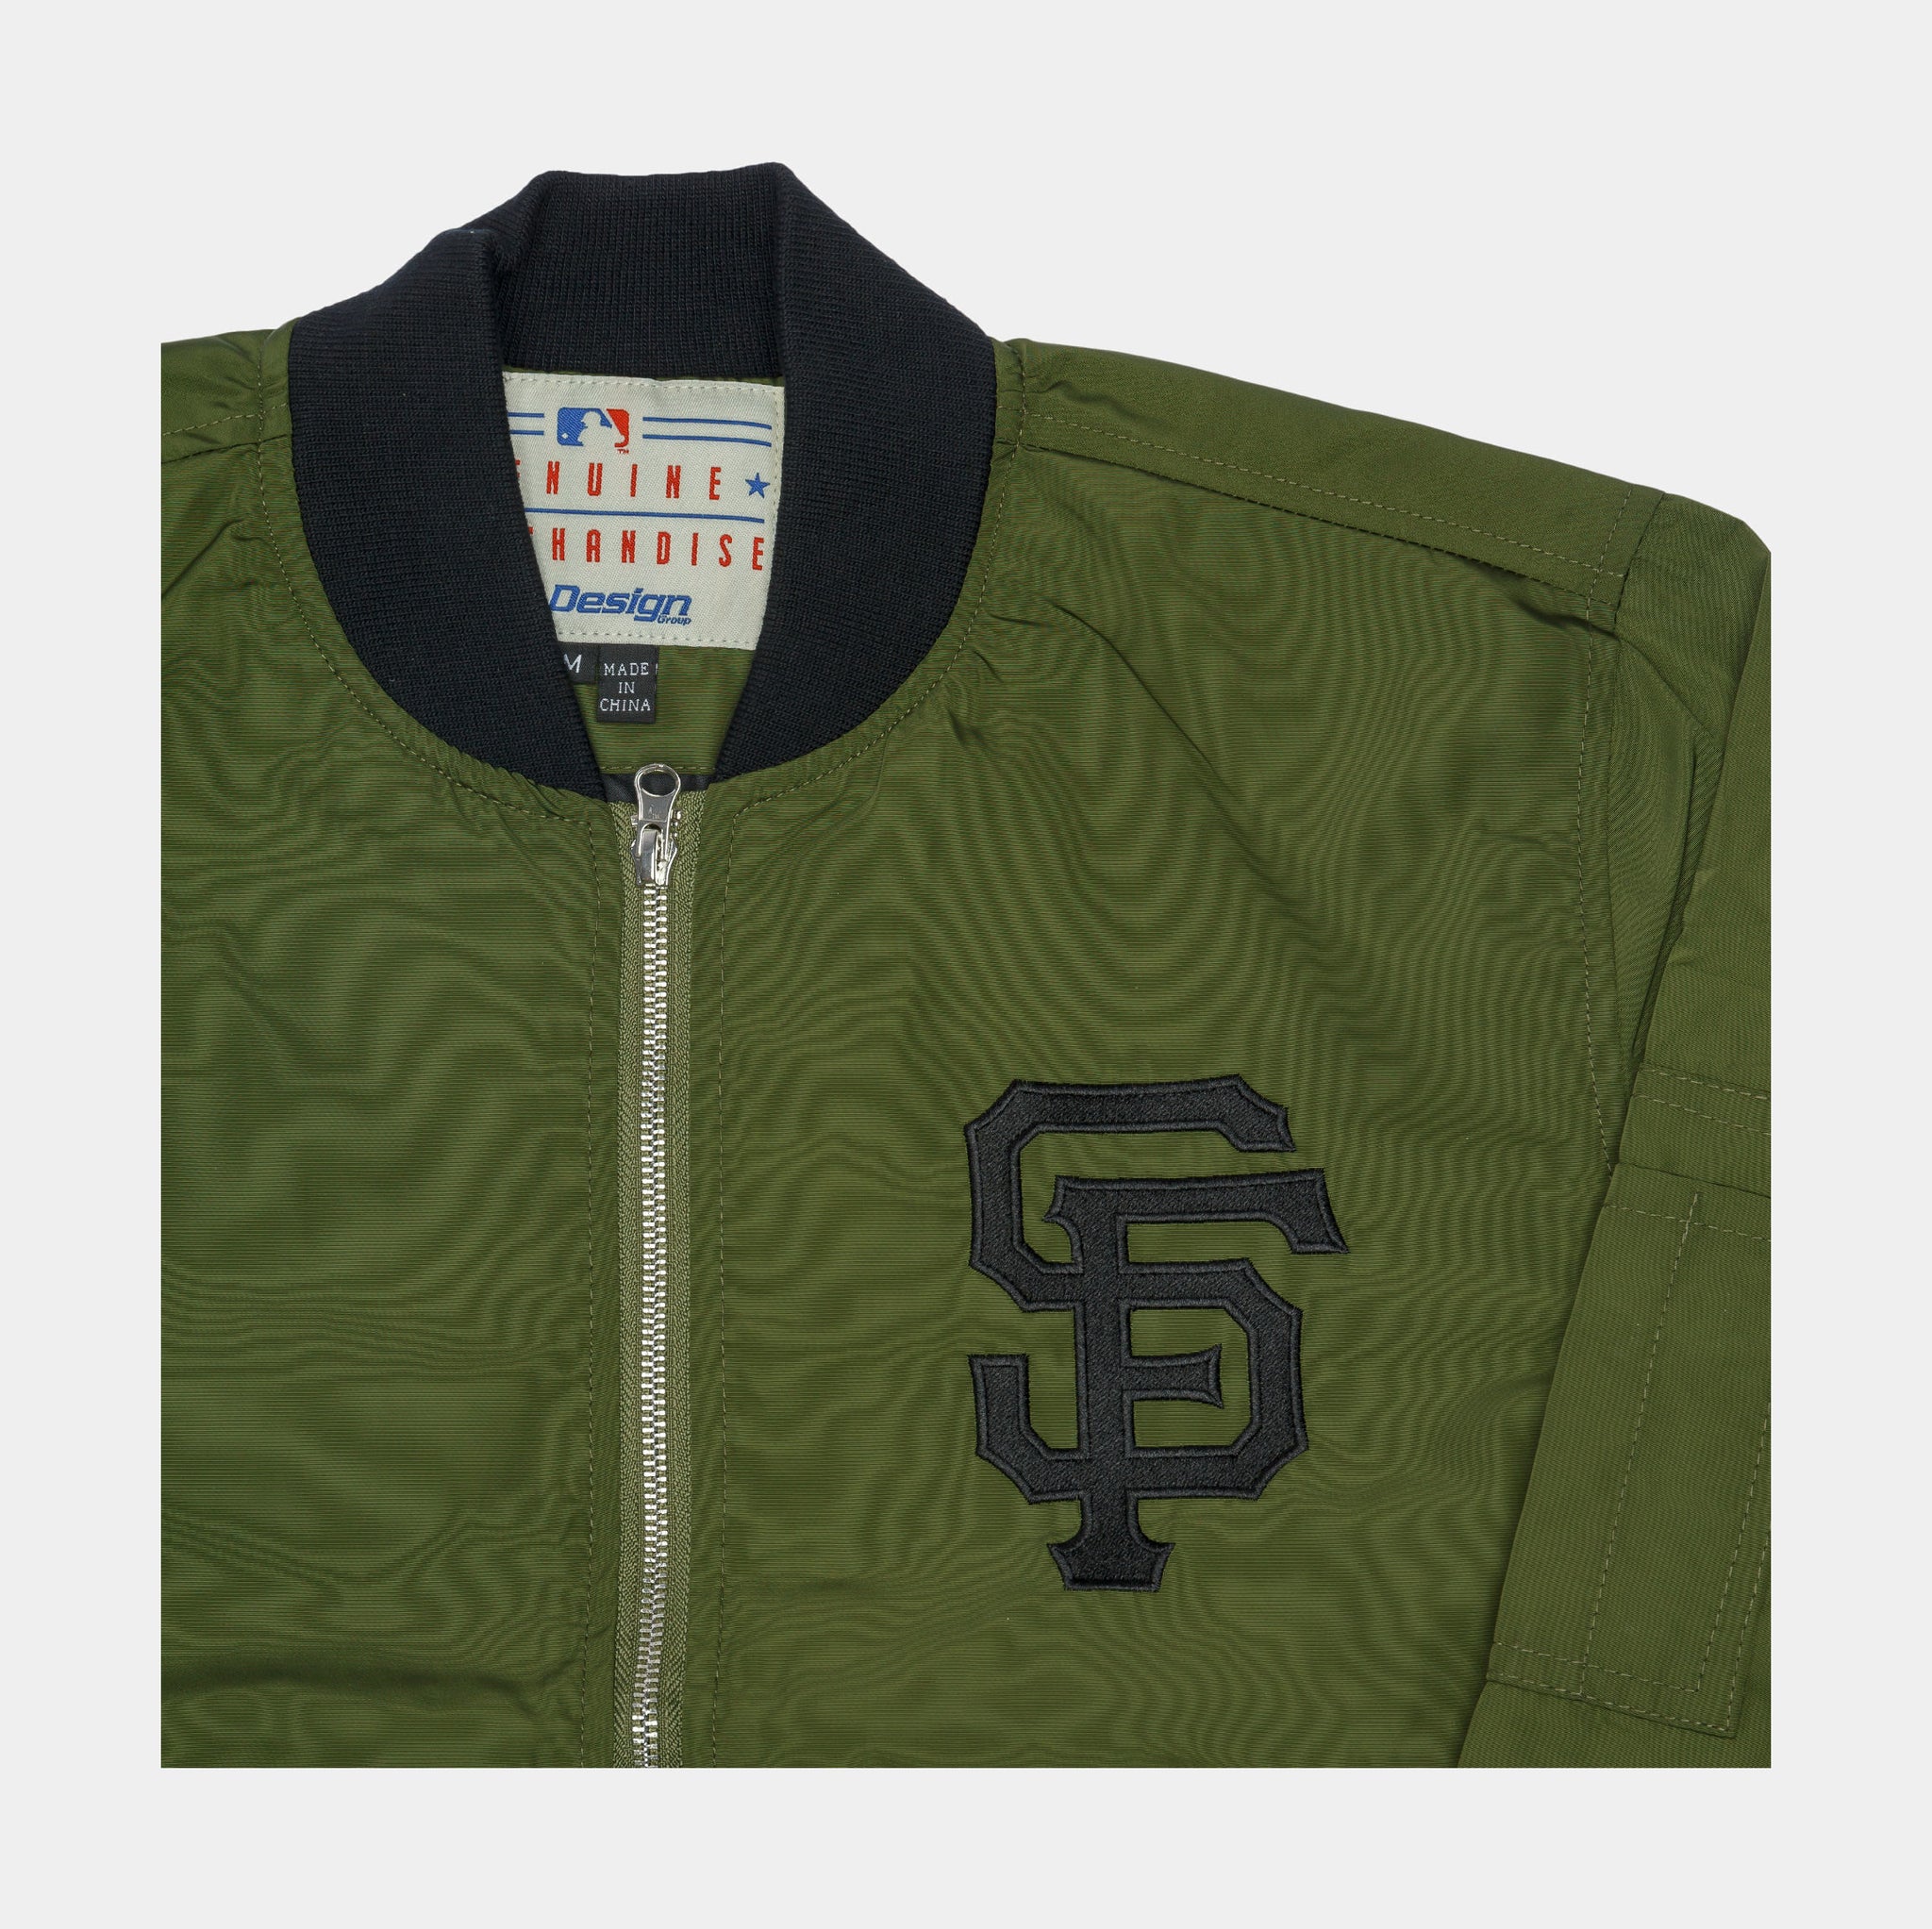 JH Distributors San Francisco Giants MLB SMU Mens Bomber Jacket (Green)